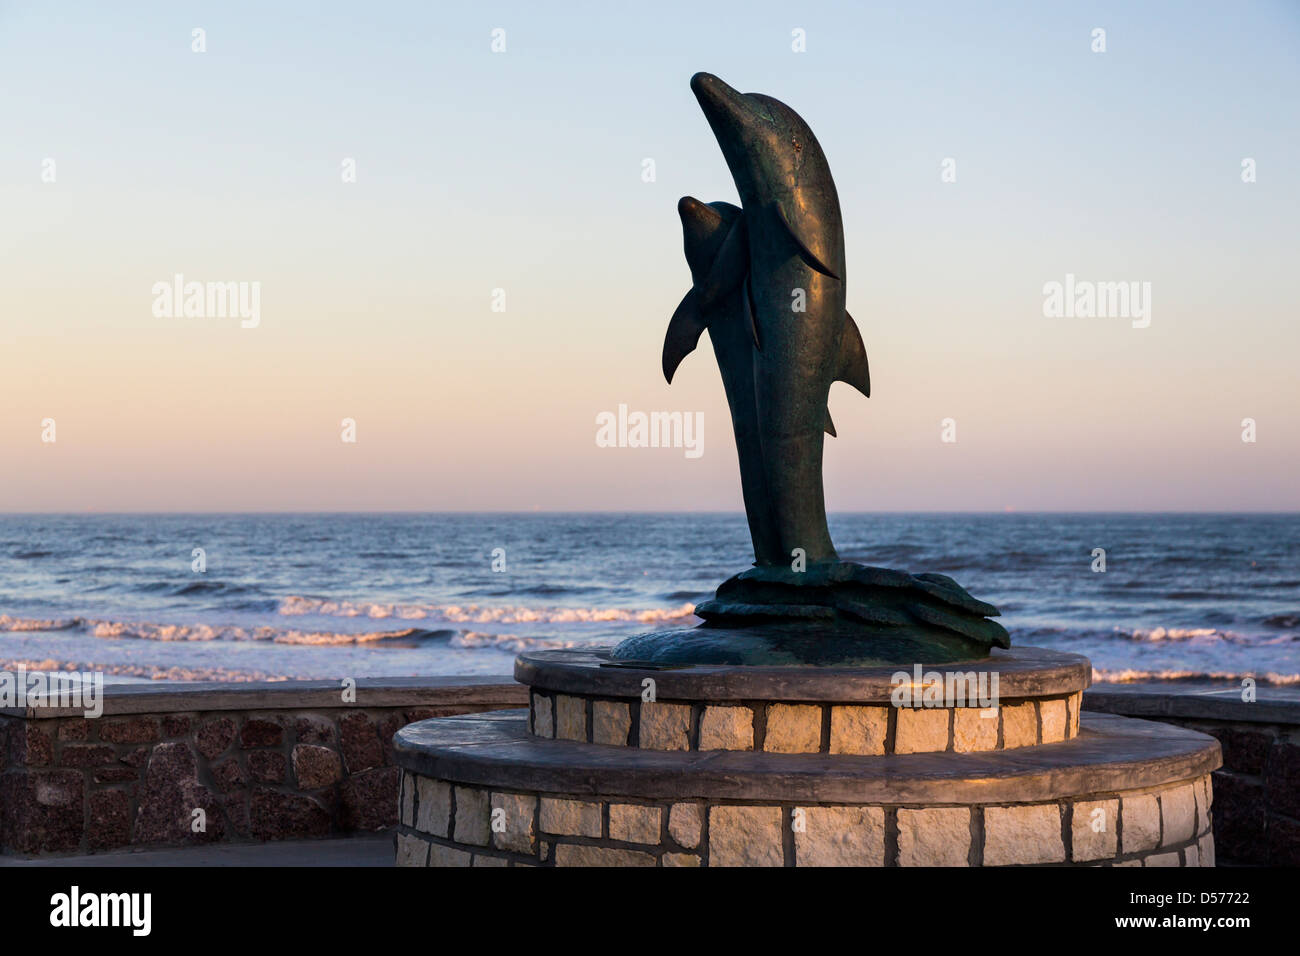 A Dolphin Sculpture on the seawall promenade on the Gulf of Mexico, Galveston, Texas, USA. Stock Photo